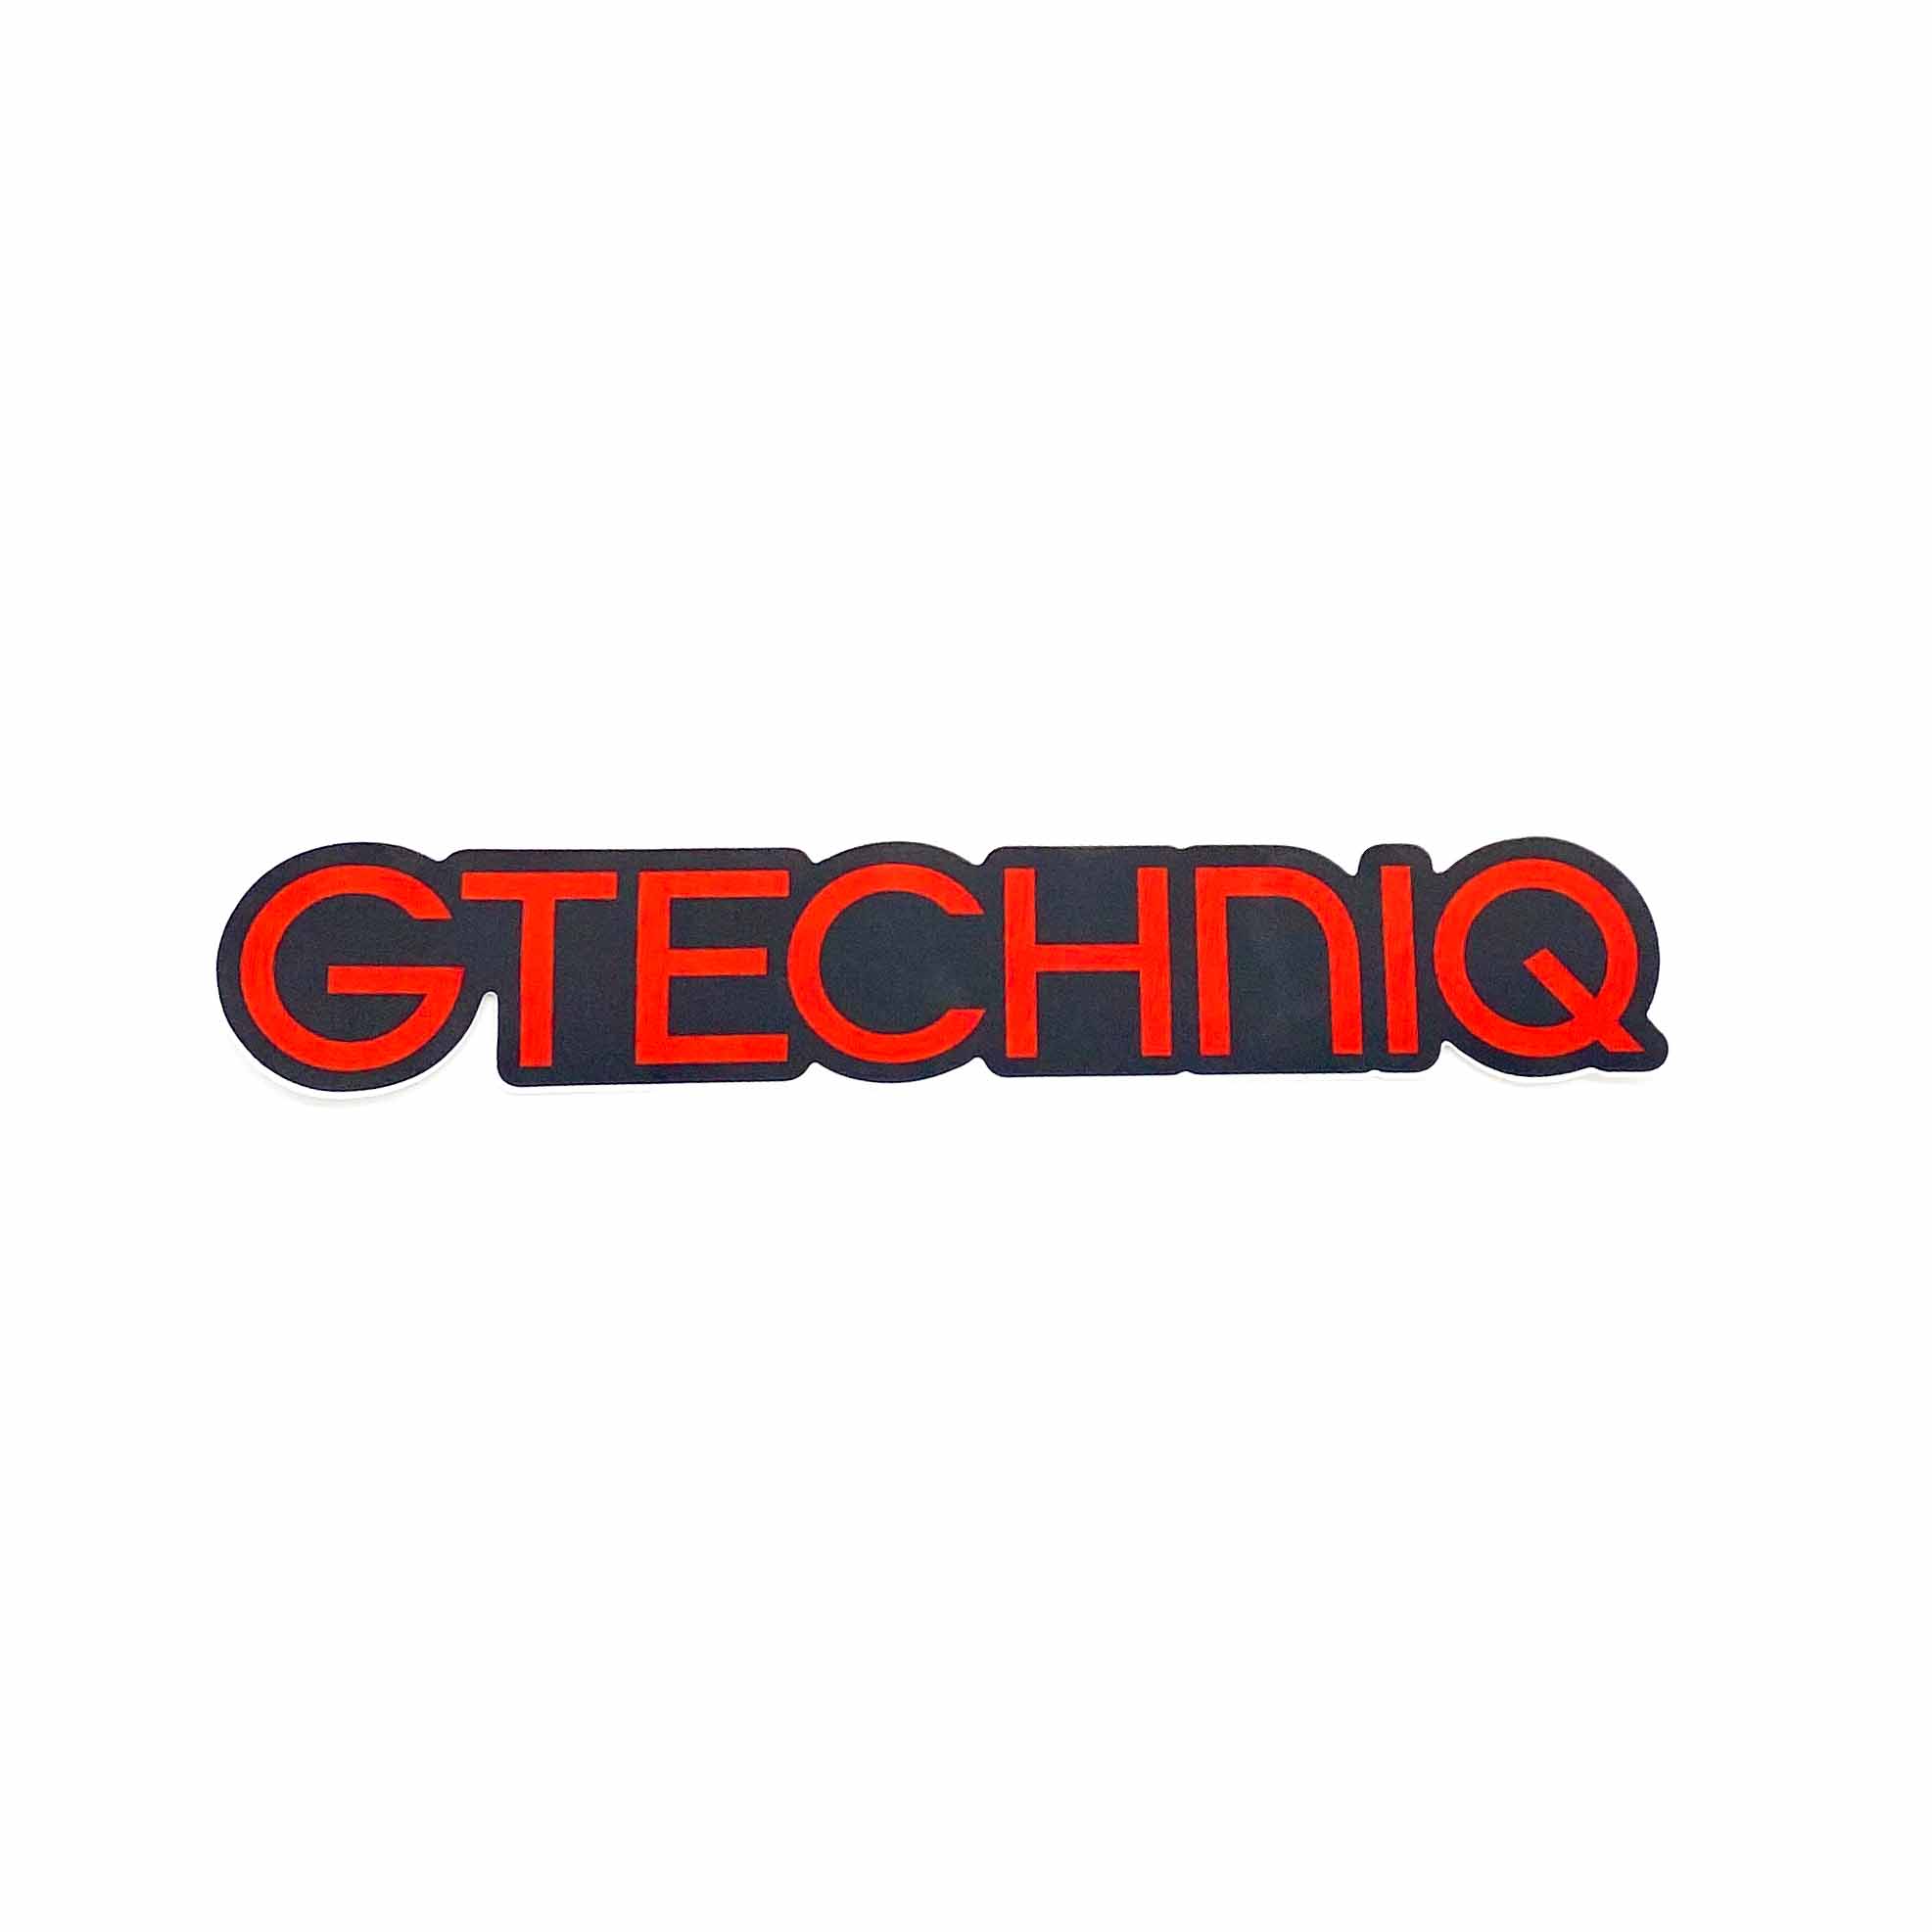 About Gtechniq